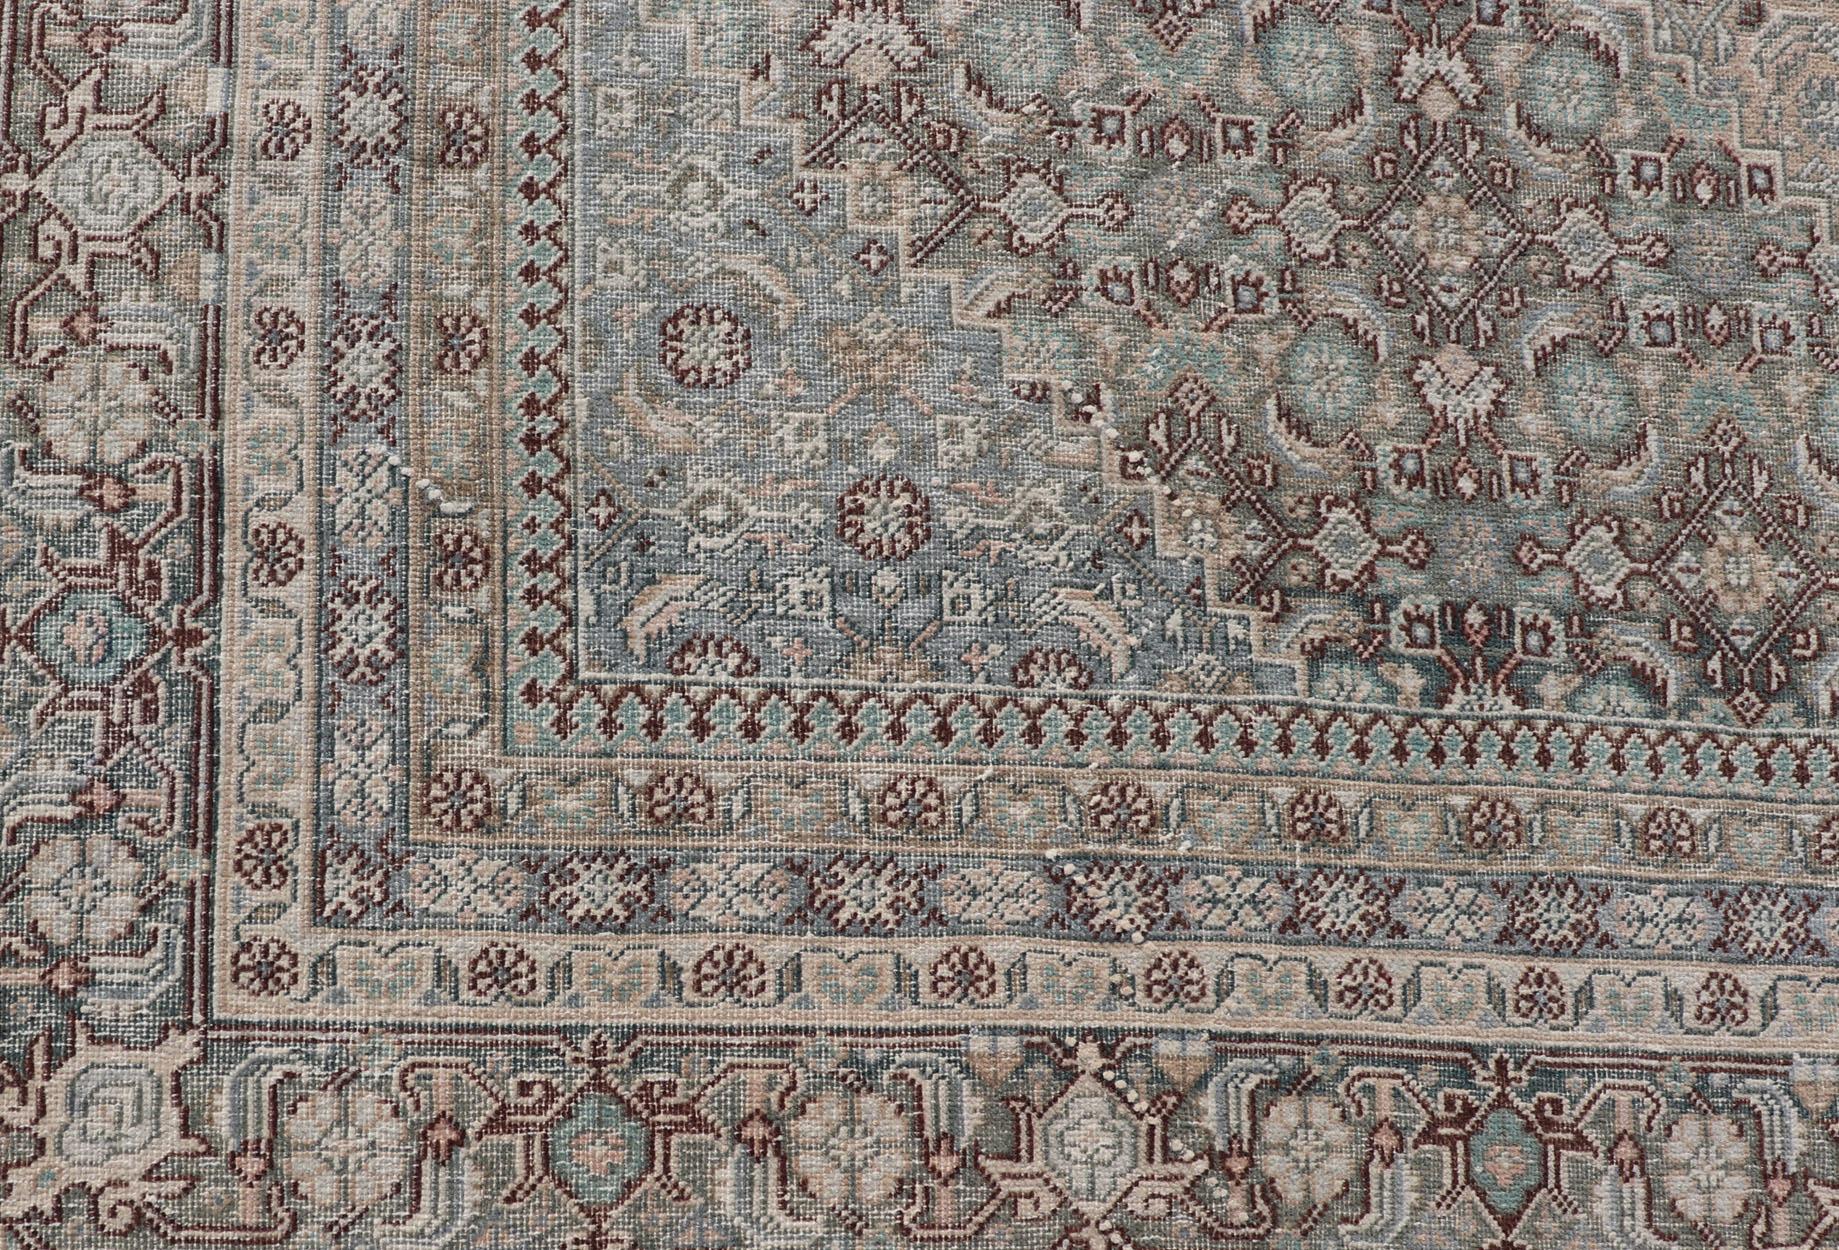 Measures: 8'9 x 12'2 
Antique Persian Tabriz Rug with All-Over Herati Design With Medallion Design. Keivan Woven Arts /  rug EN-4653, country of origin / type: Iran / Tabriz, circa 1920.

This magnificent 20th century Persian Tabriz rug bears a